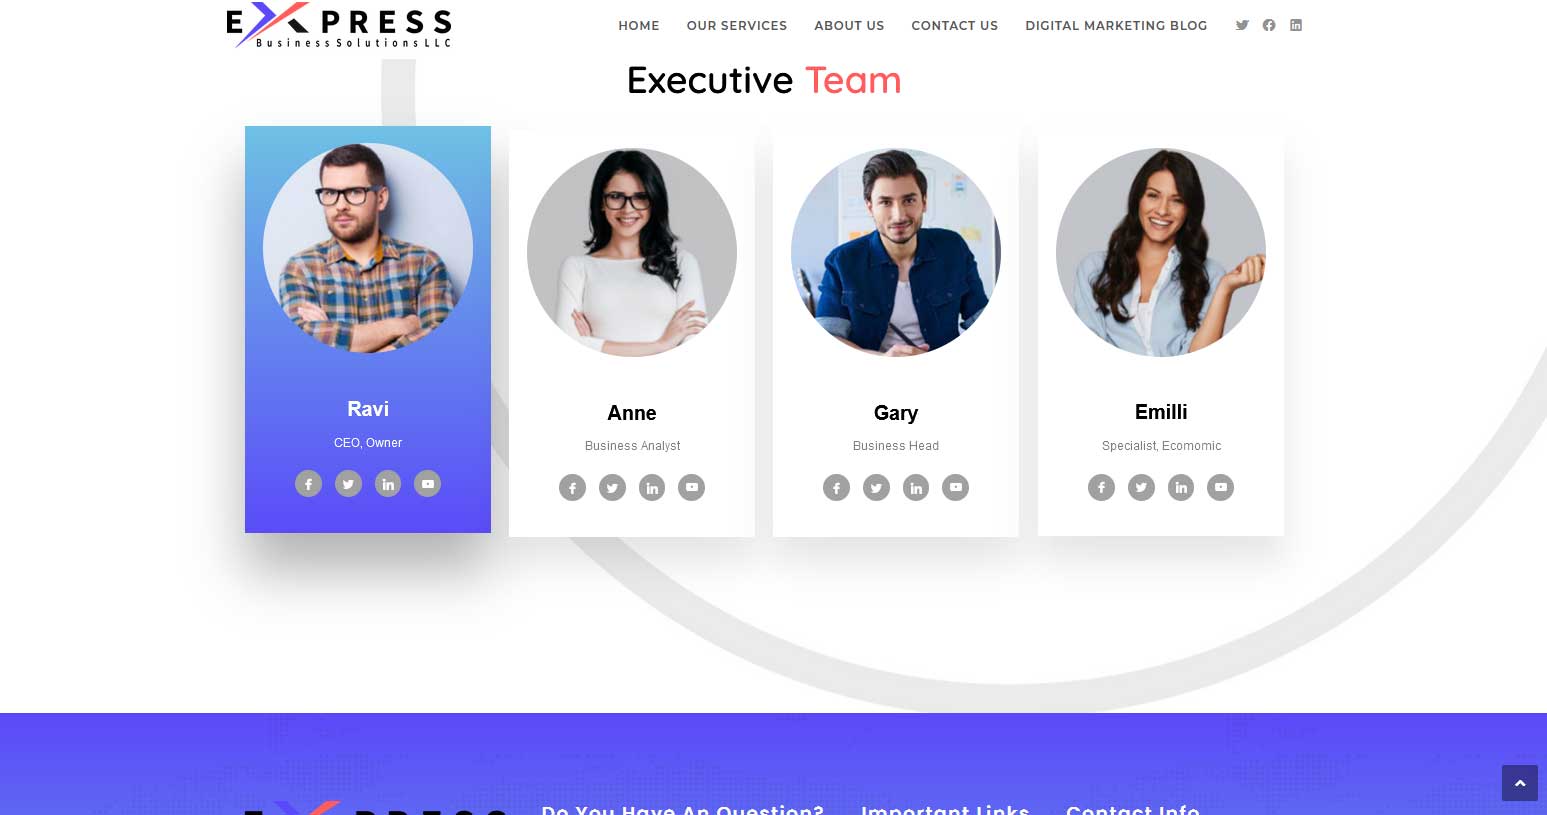 express-biz-sol-executive-team